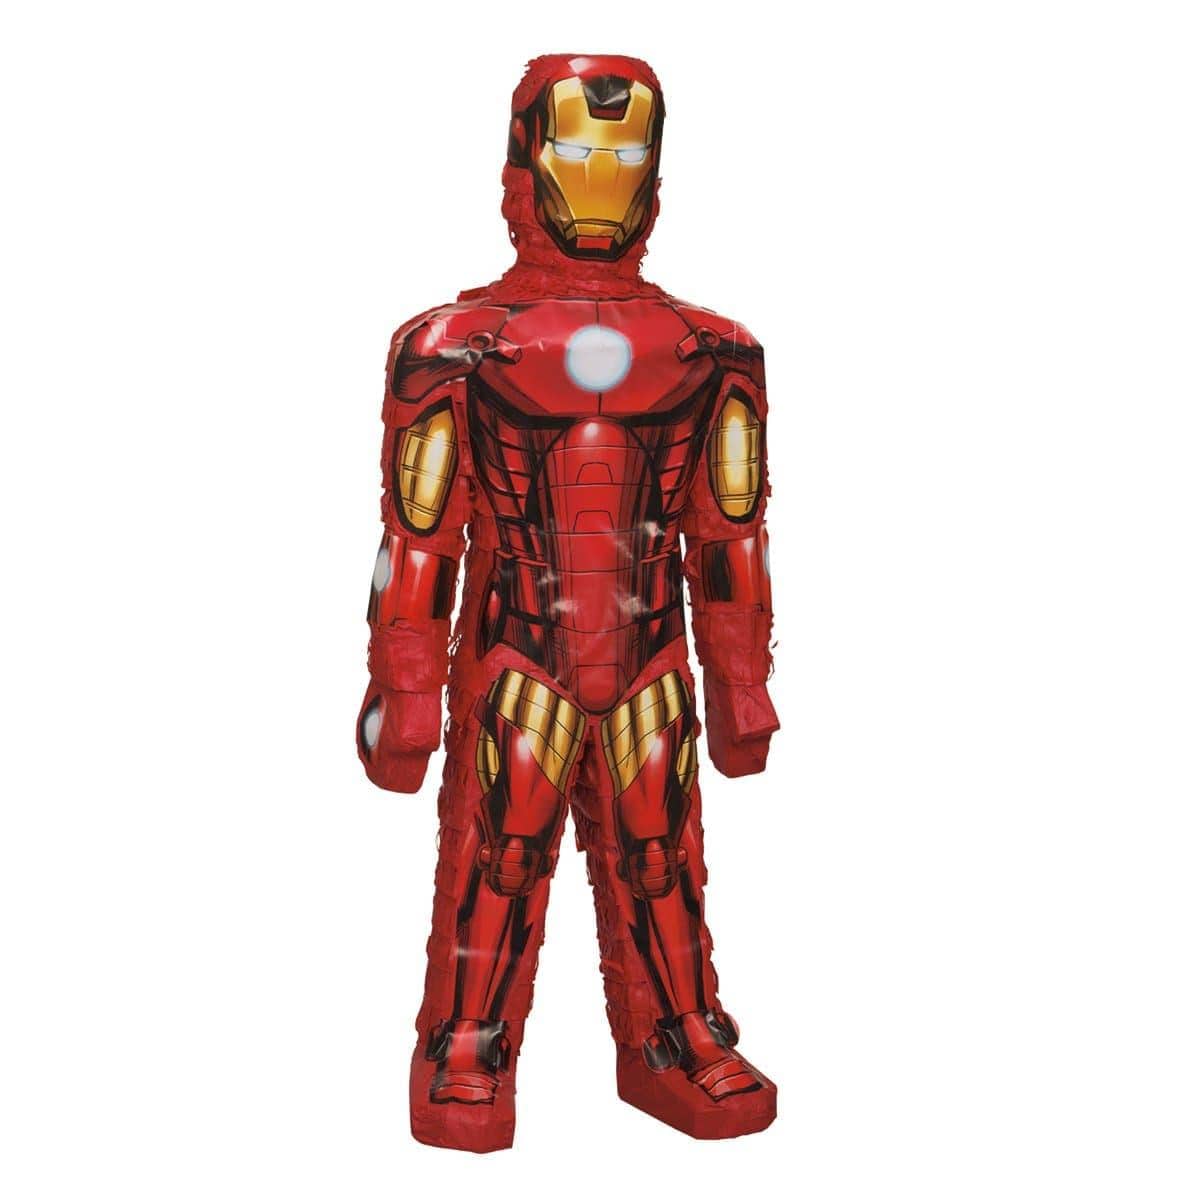 Buy Pinatas Iron Man - 3D Piñata sold at Party Expert